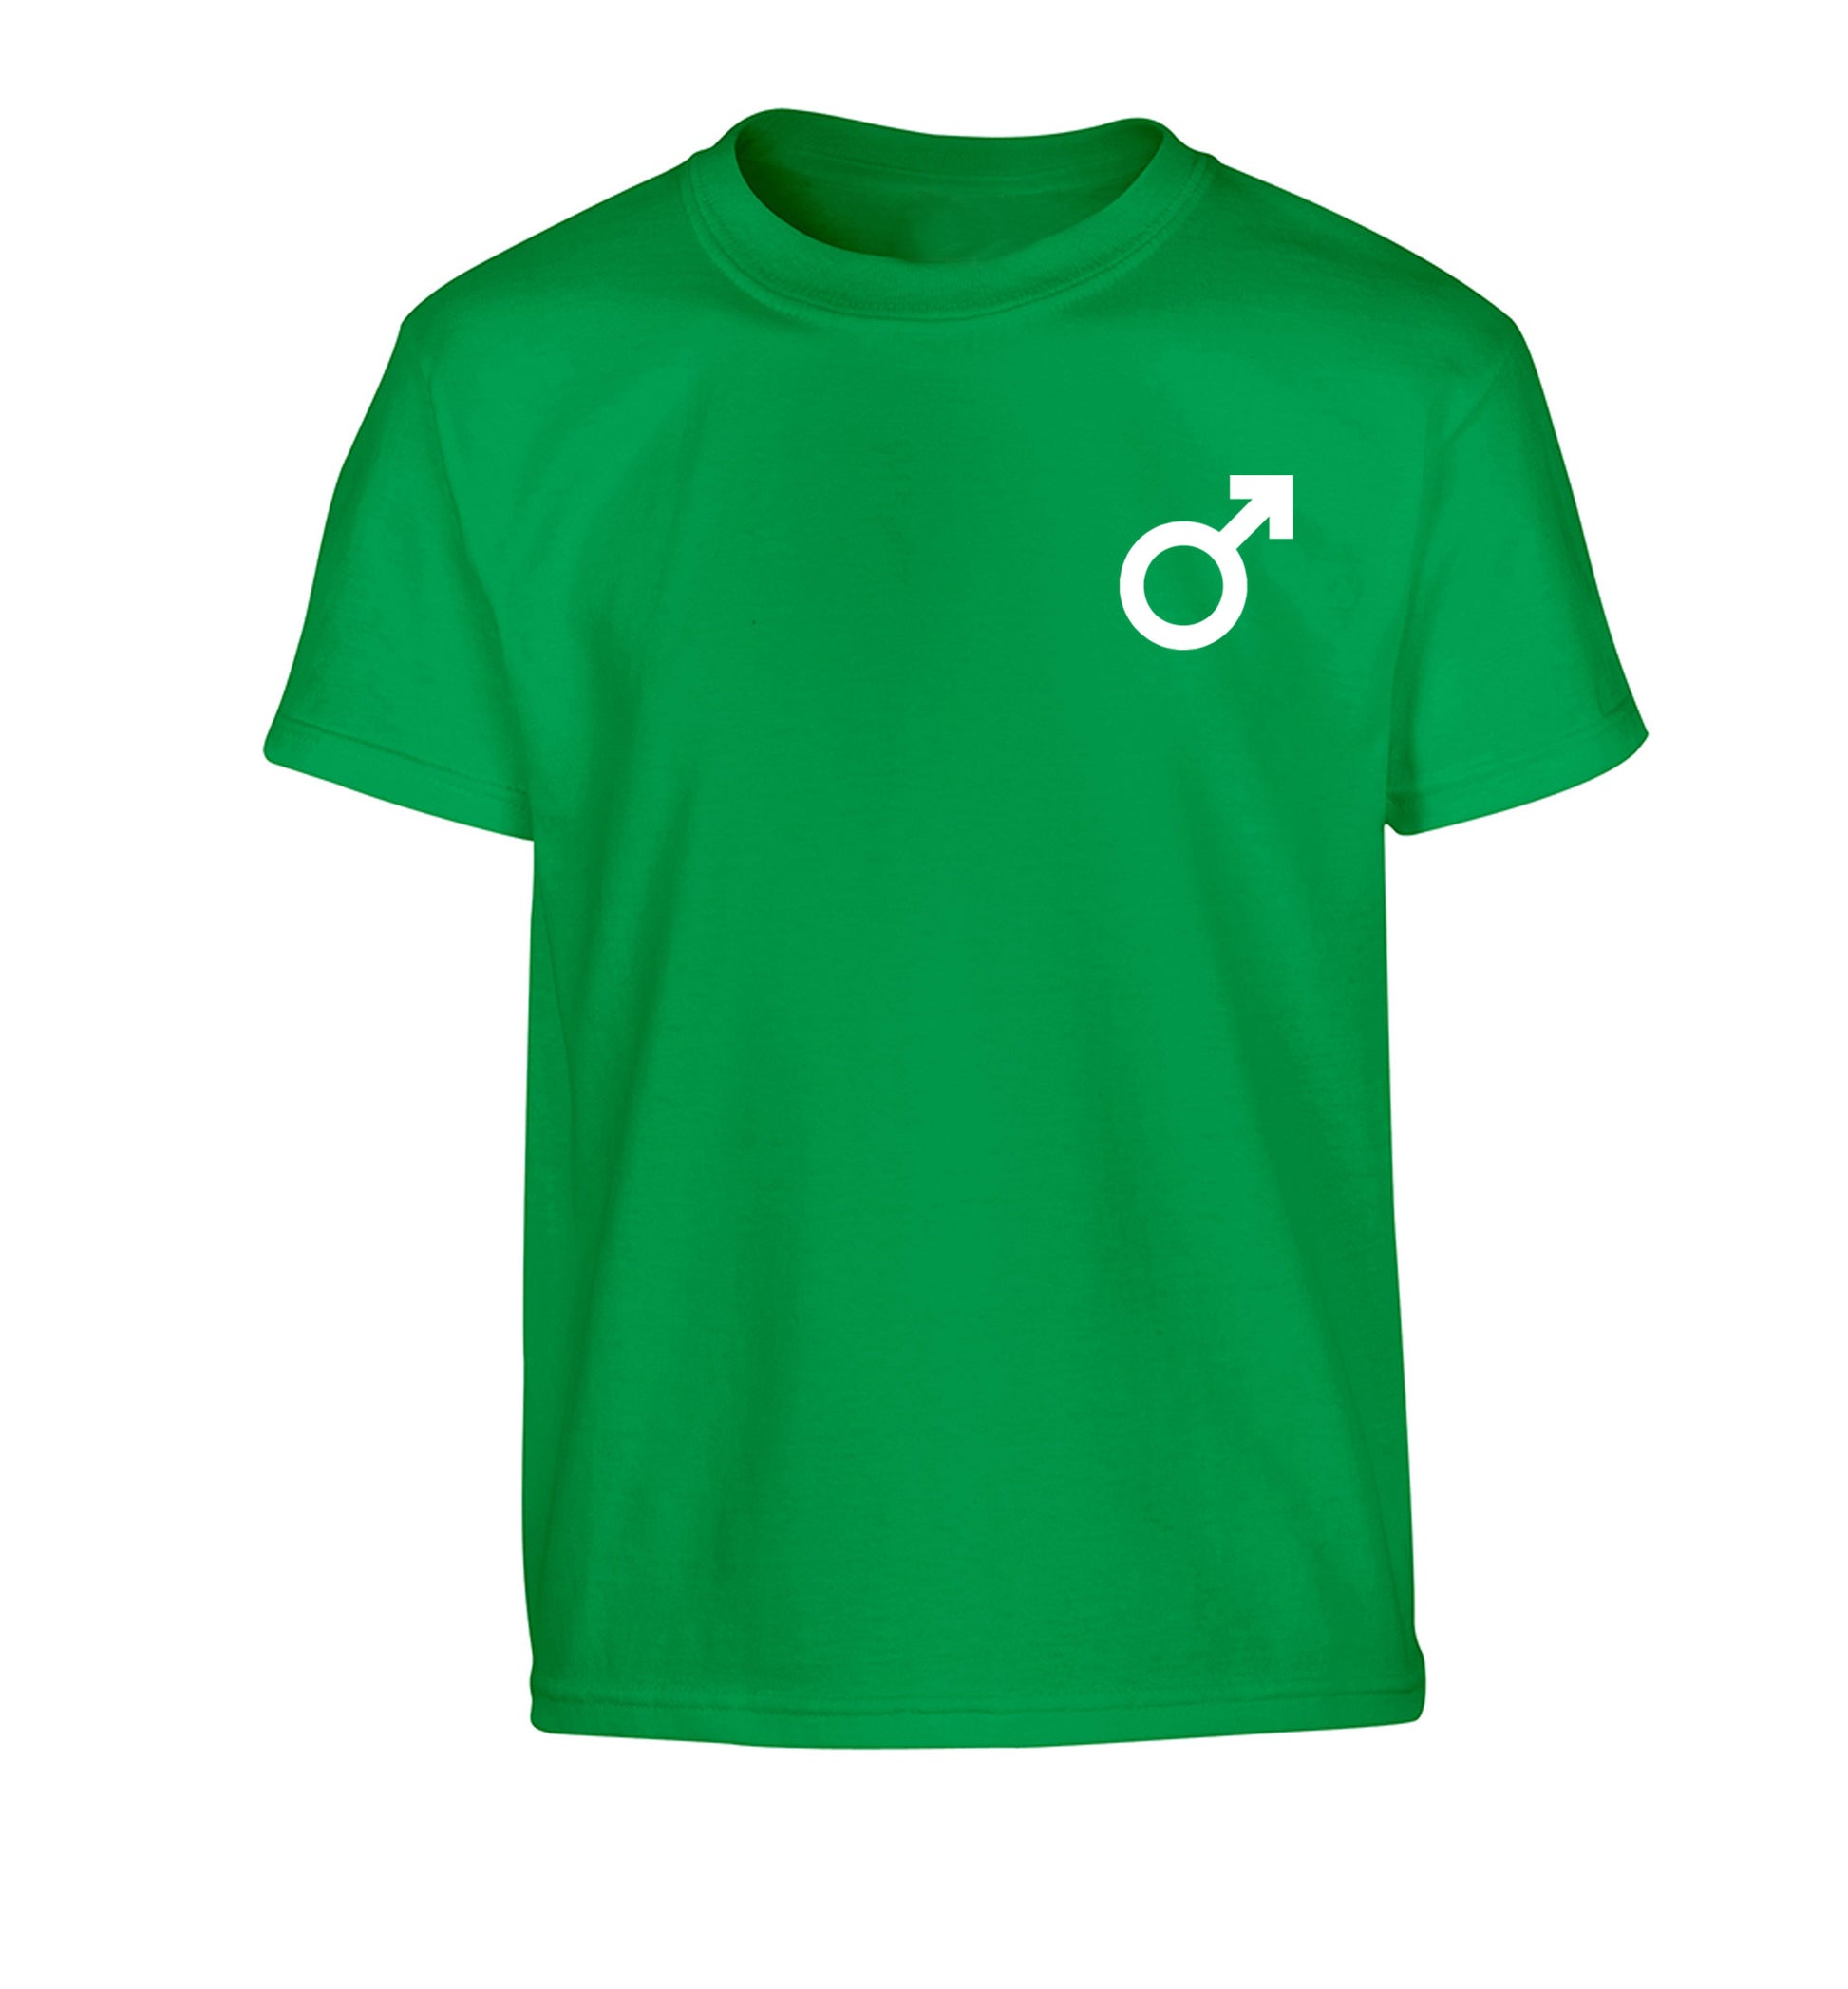 Male symbol pocket Children's green Tshirt 12-14 Years